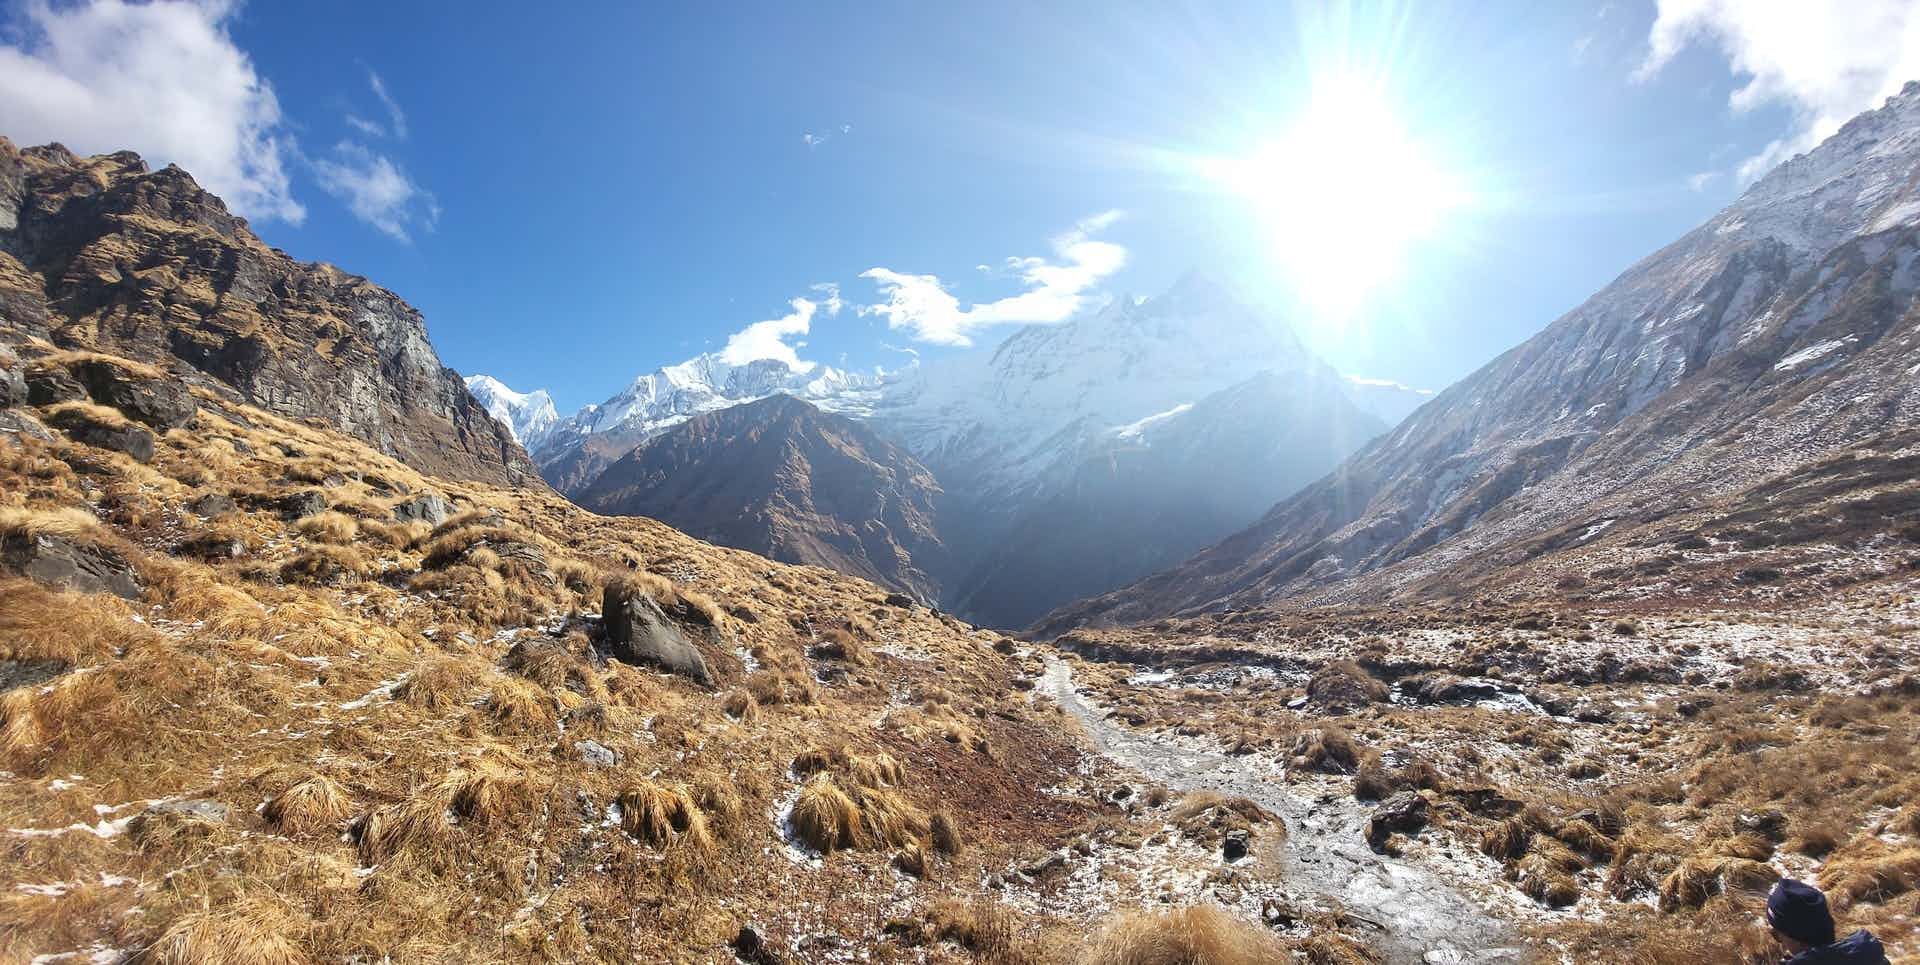 Just got back from trekking the Annapurna s...